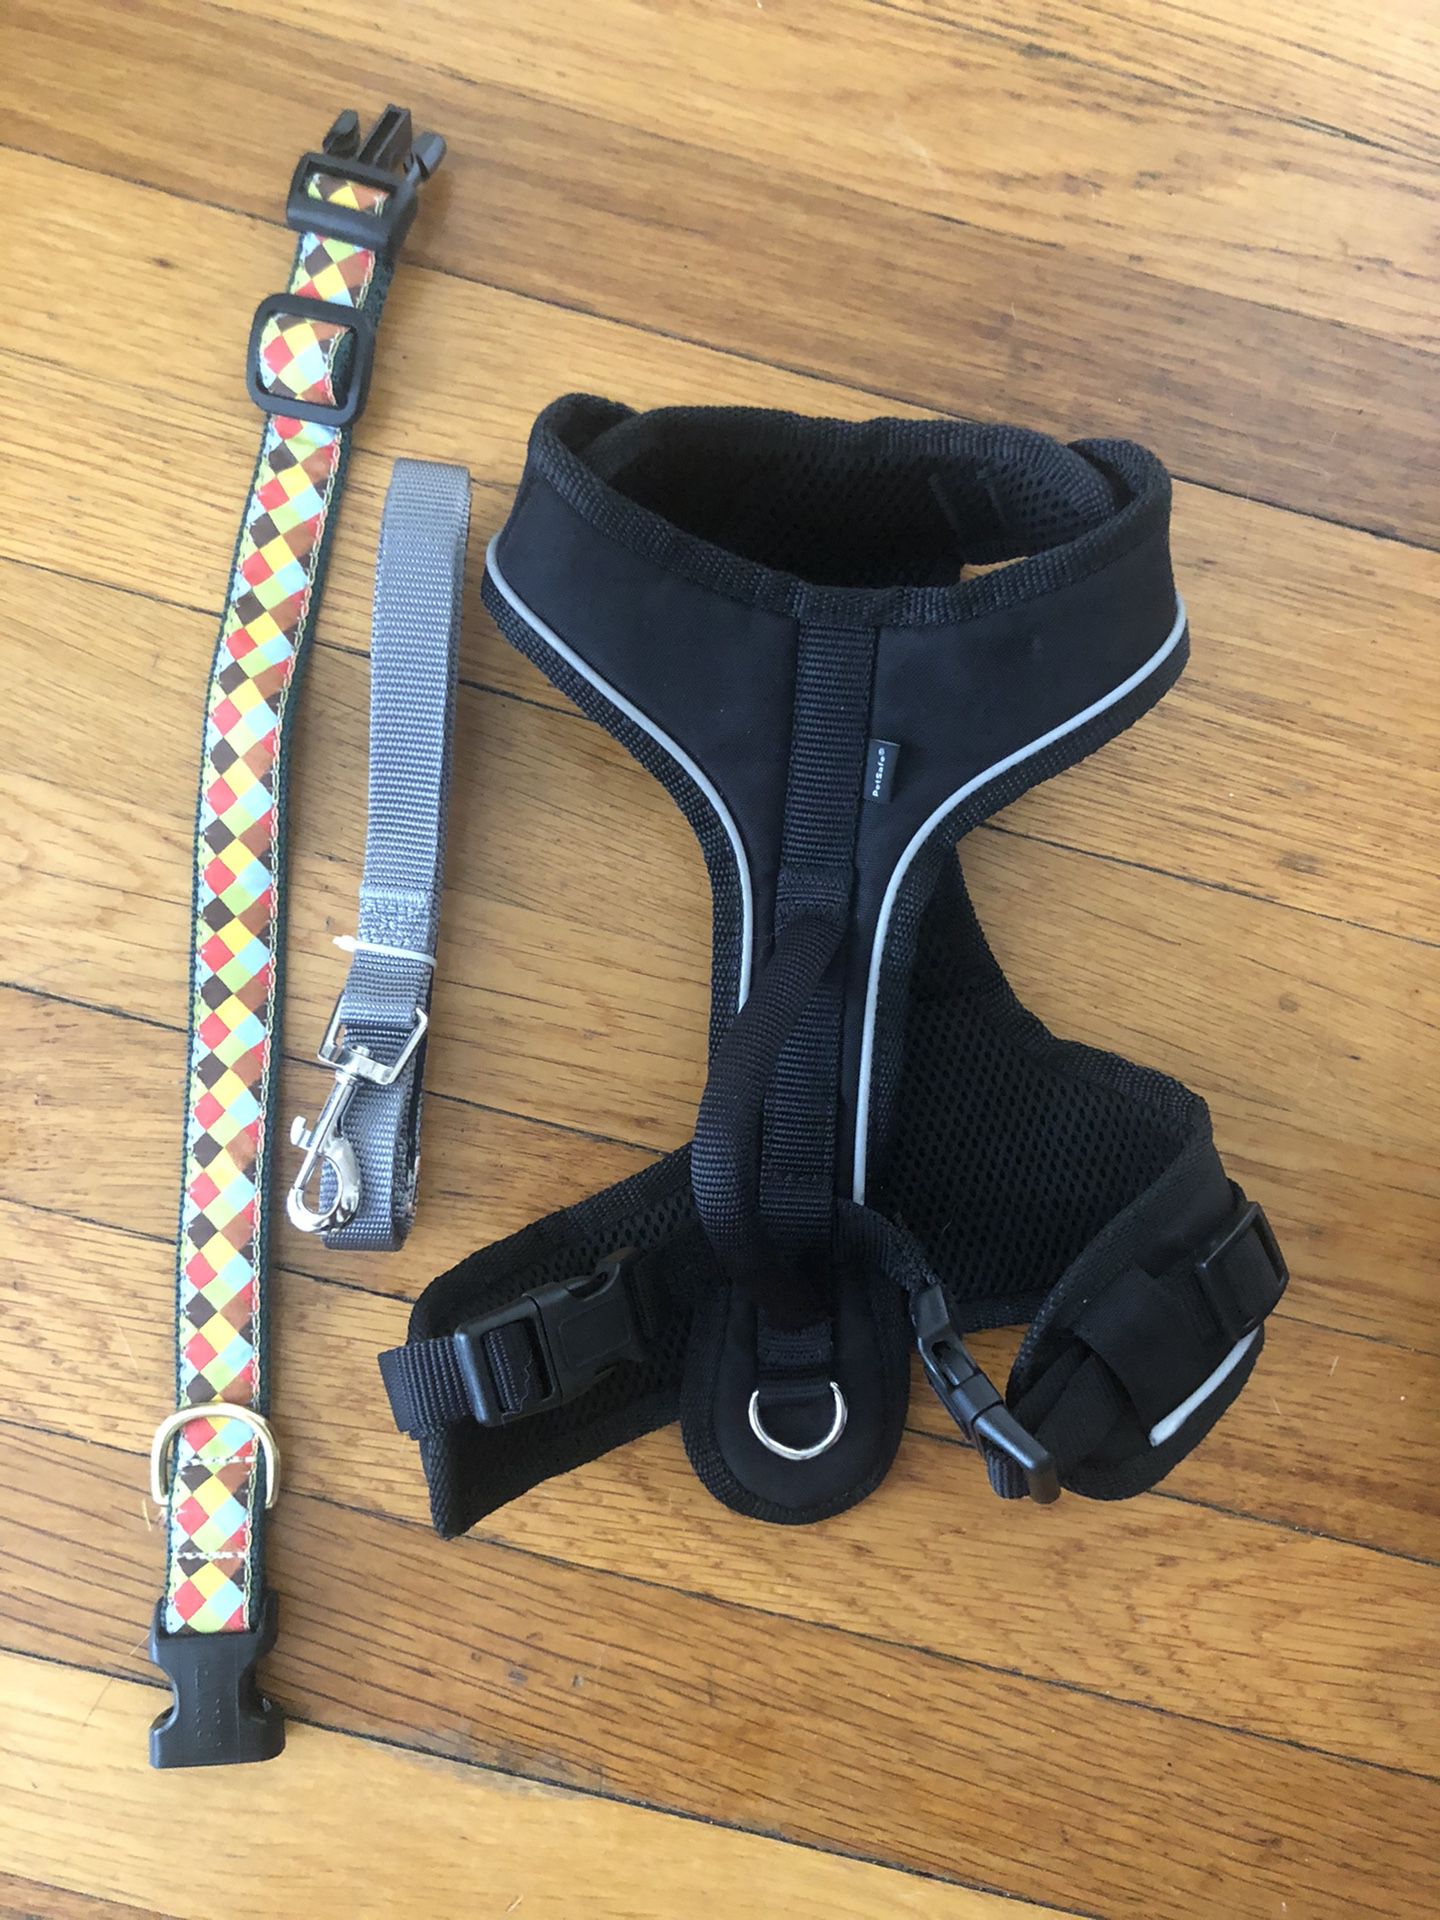 Dog harness (s), collar (M), leash new